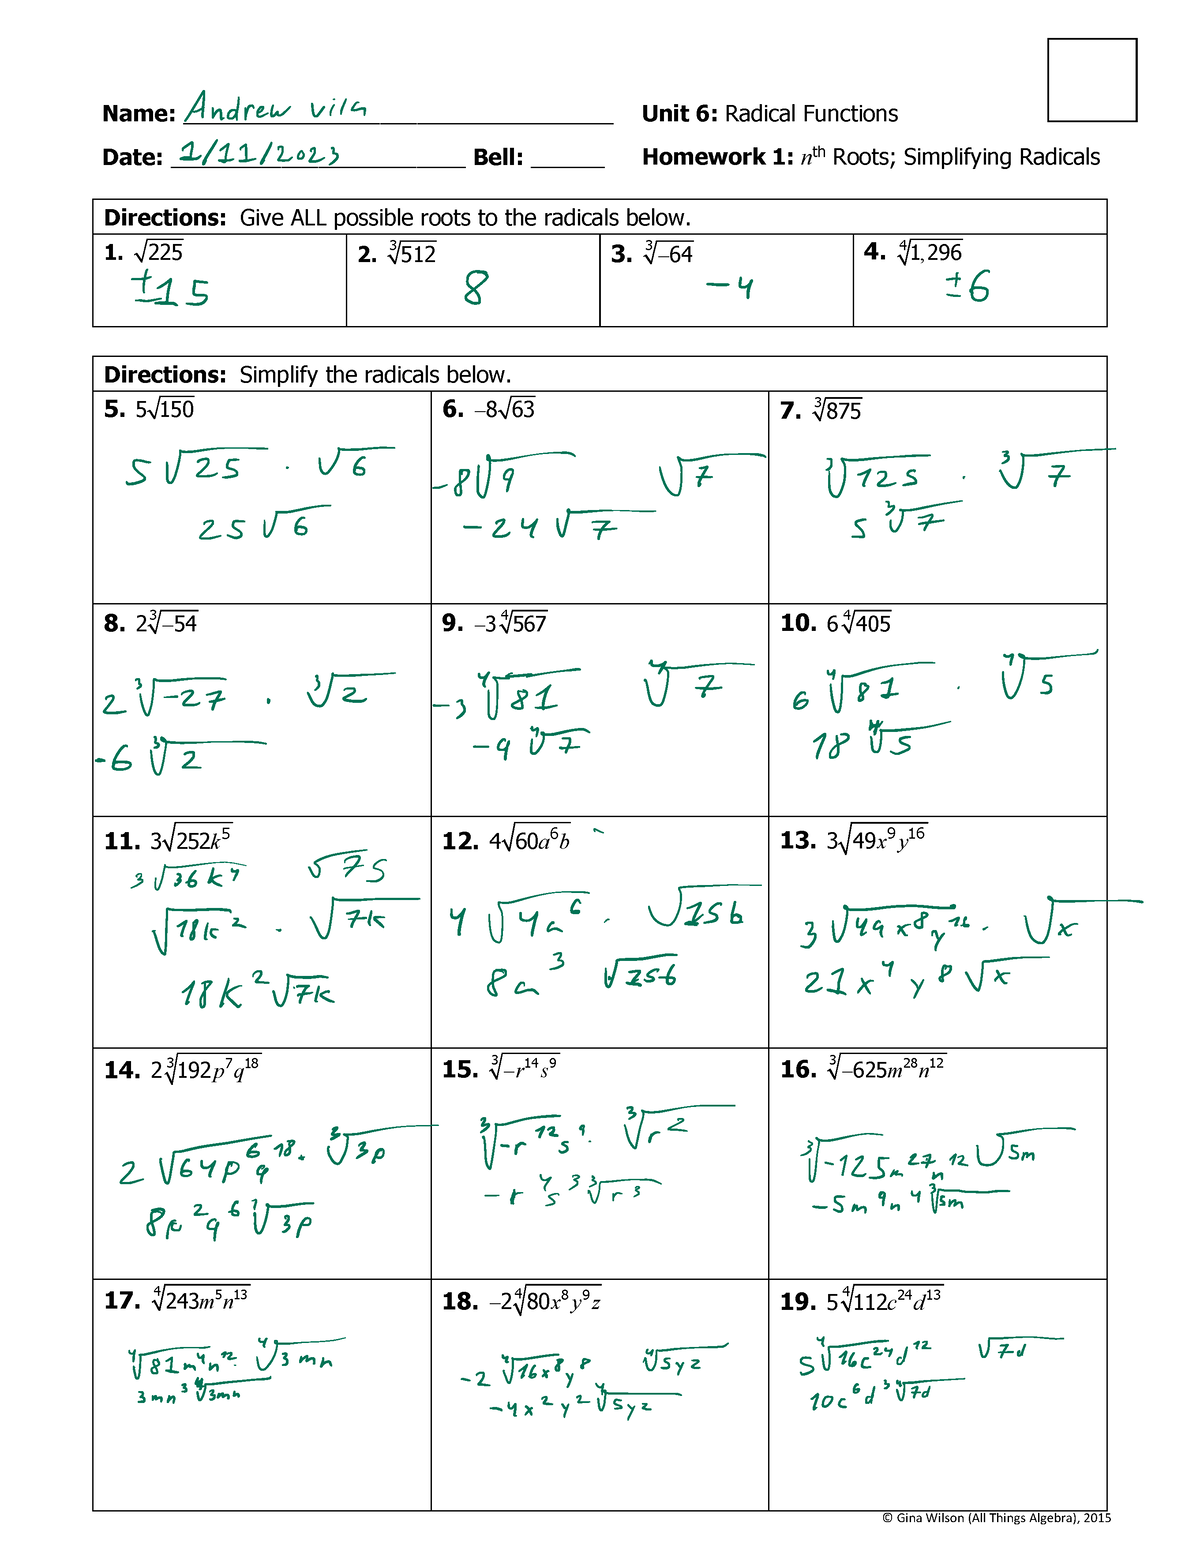 unit 6 radical functions homework 7 answer key